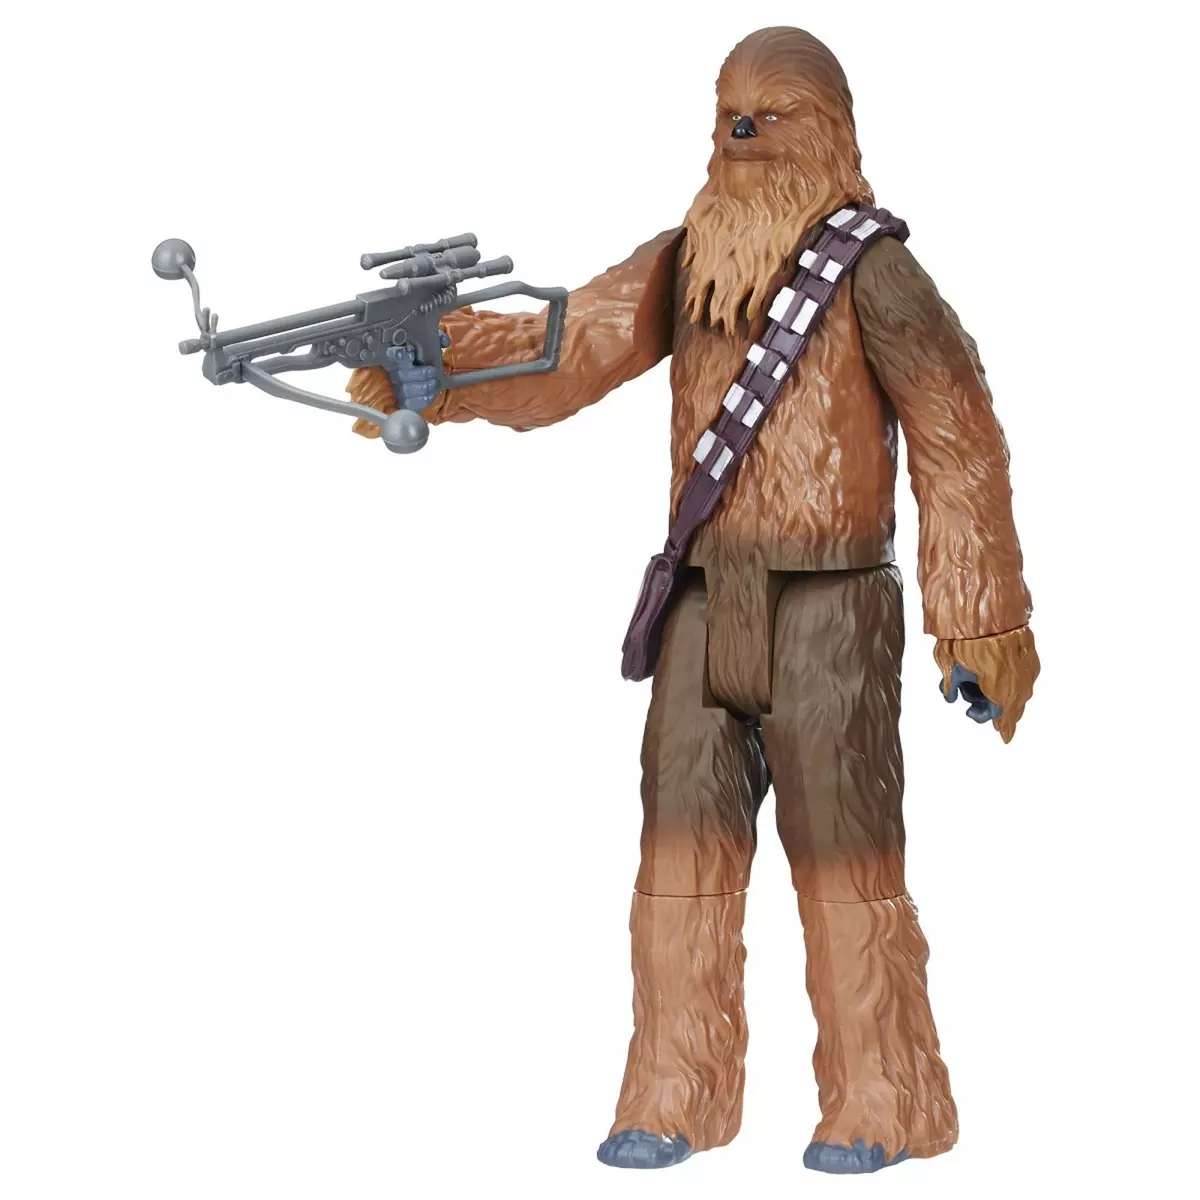 HASBRO Figurine 30cm Titan deluxe Chewbacca Star Wars